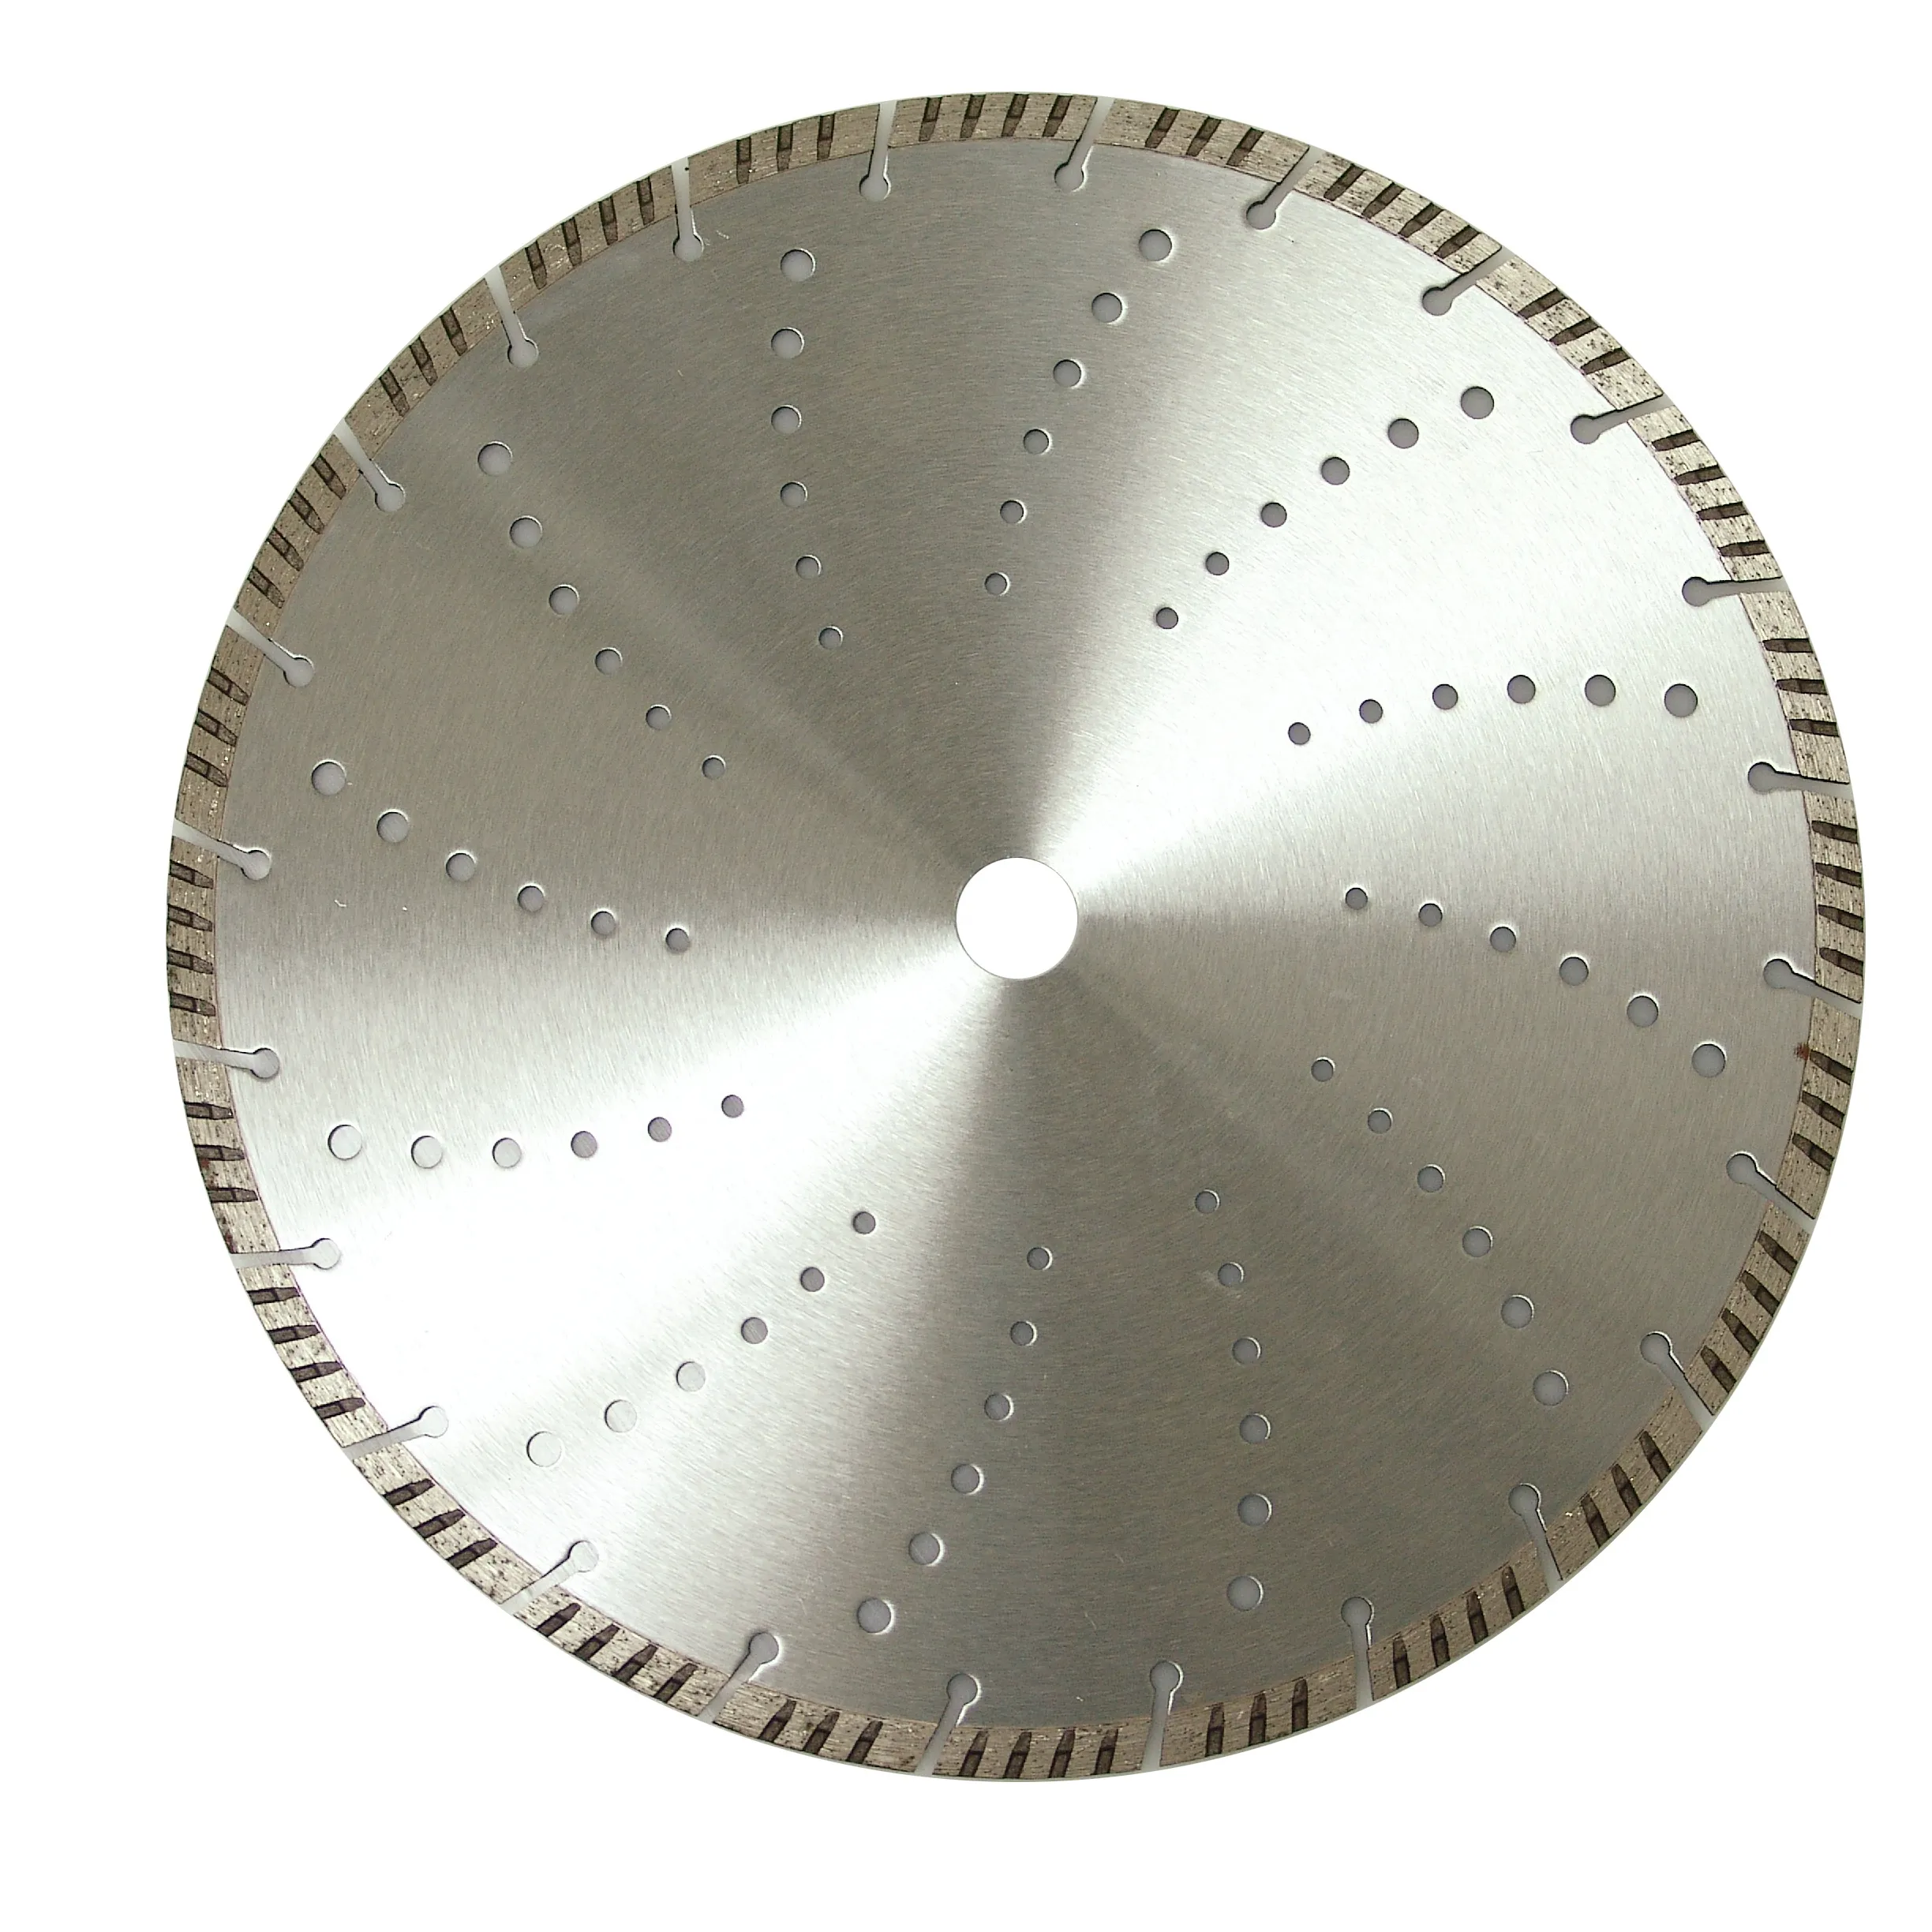 Wholesale Tct Or Pcd 125mm Diamond Saw Blade Metal Cutting Circular Saw Blades For Wood Stone Granite